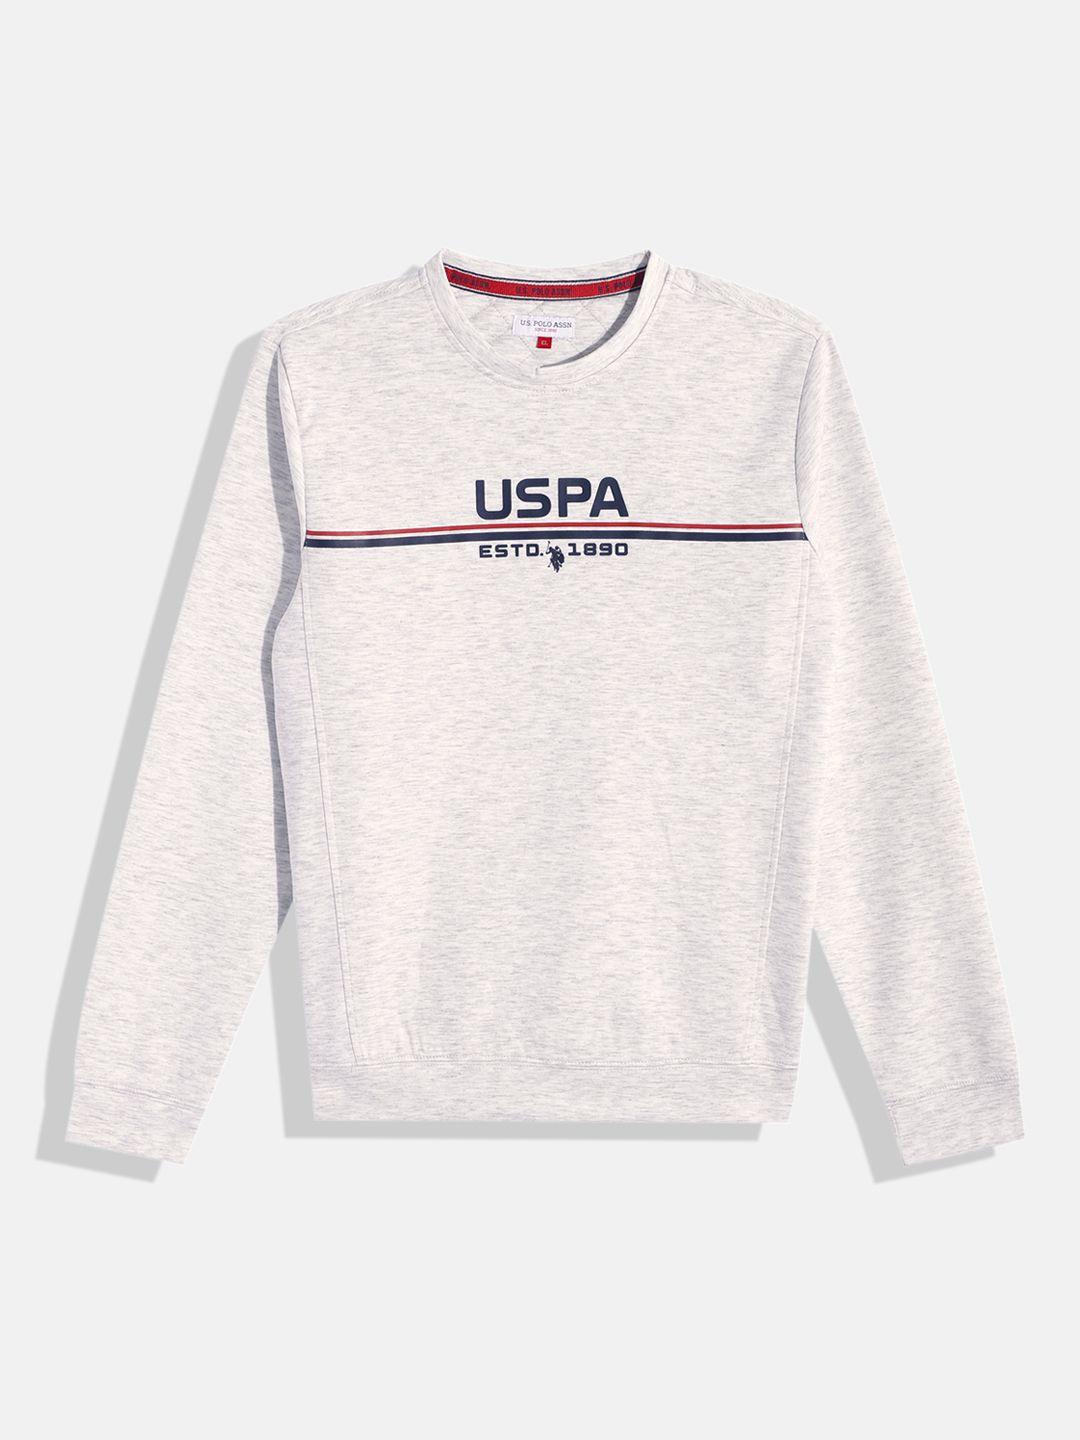 u.s. polo assn. kids boys grey melange brand logo print sweatshirt